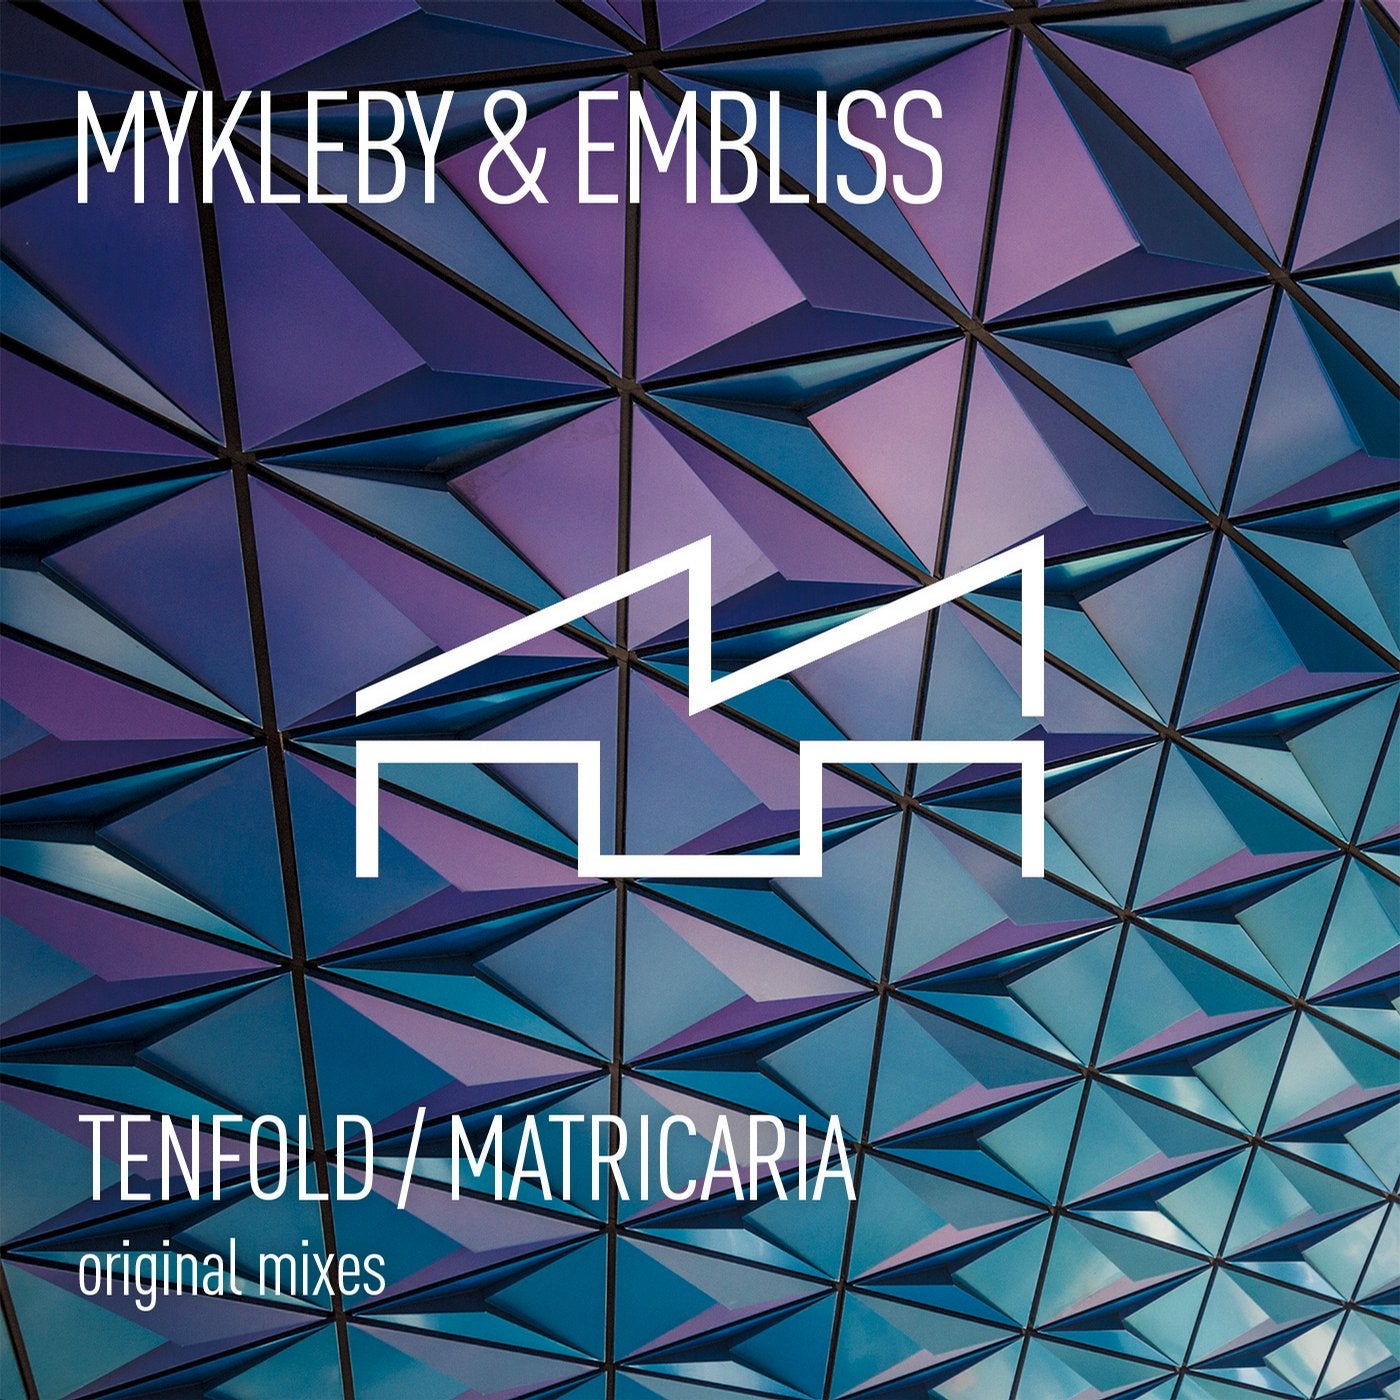 Tenfold / Matricaria